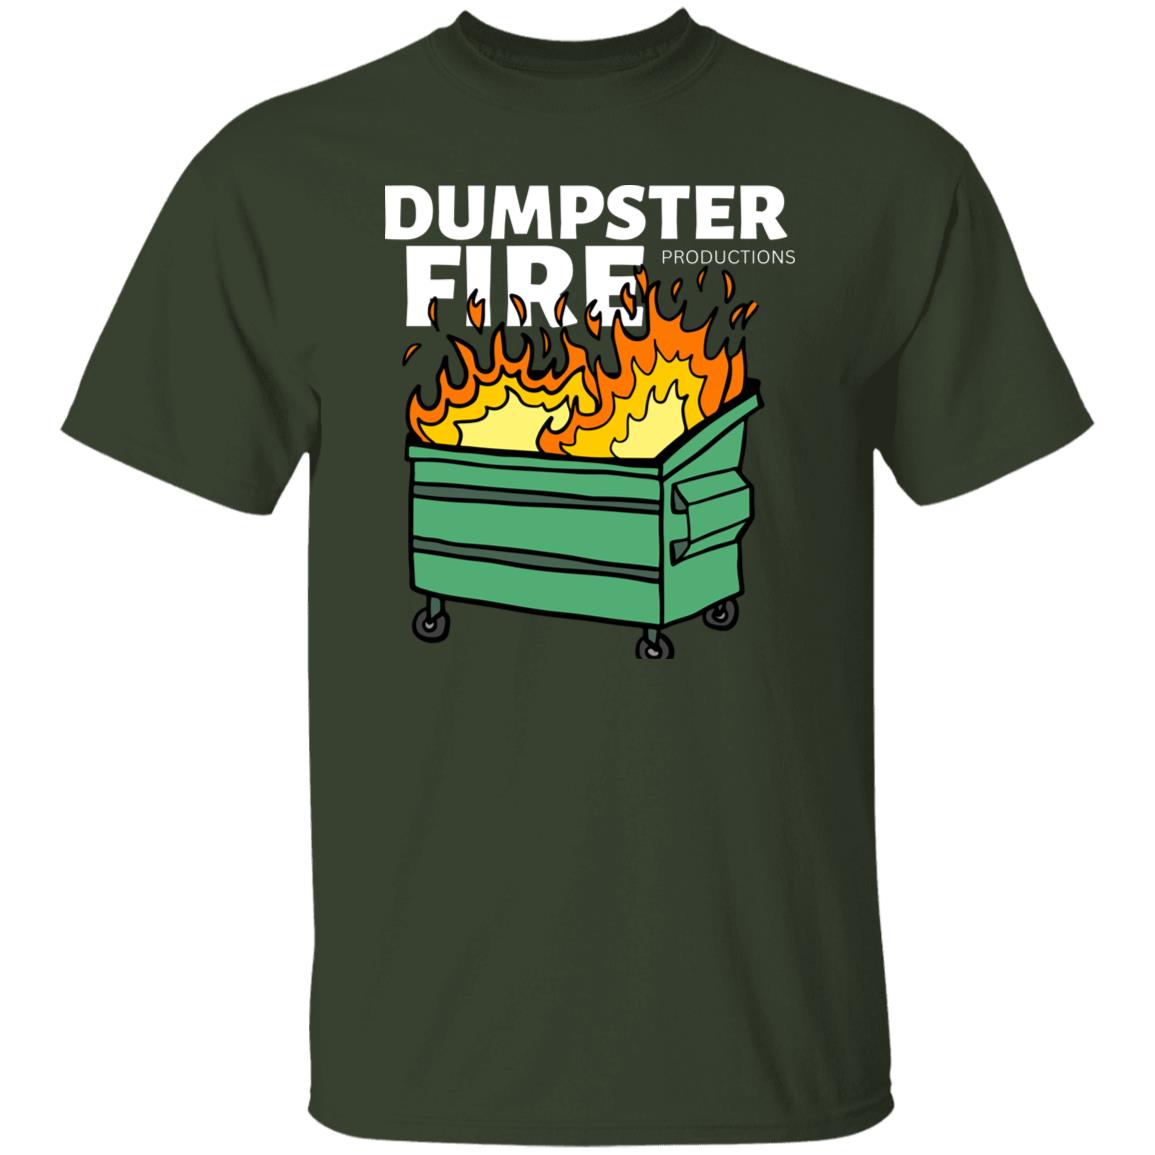 Dumpster Fire Productions Skate Company T-Shirt Skateboarding shirt